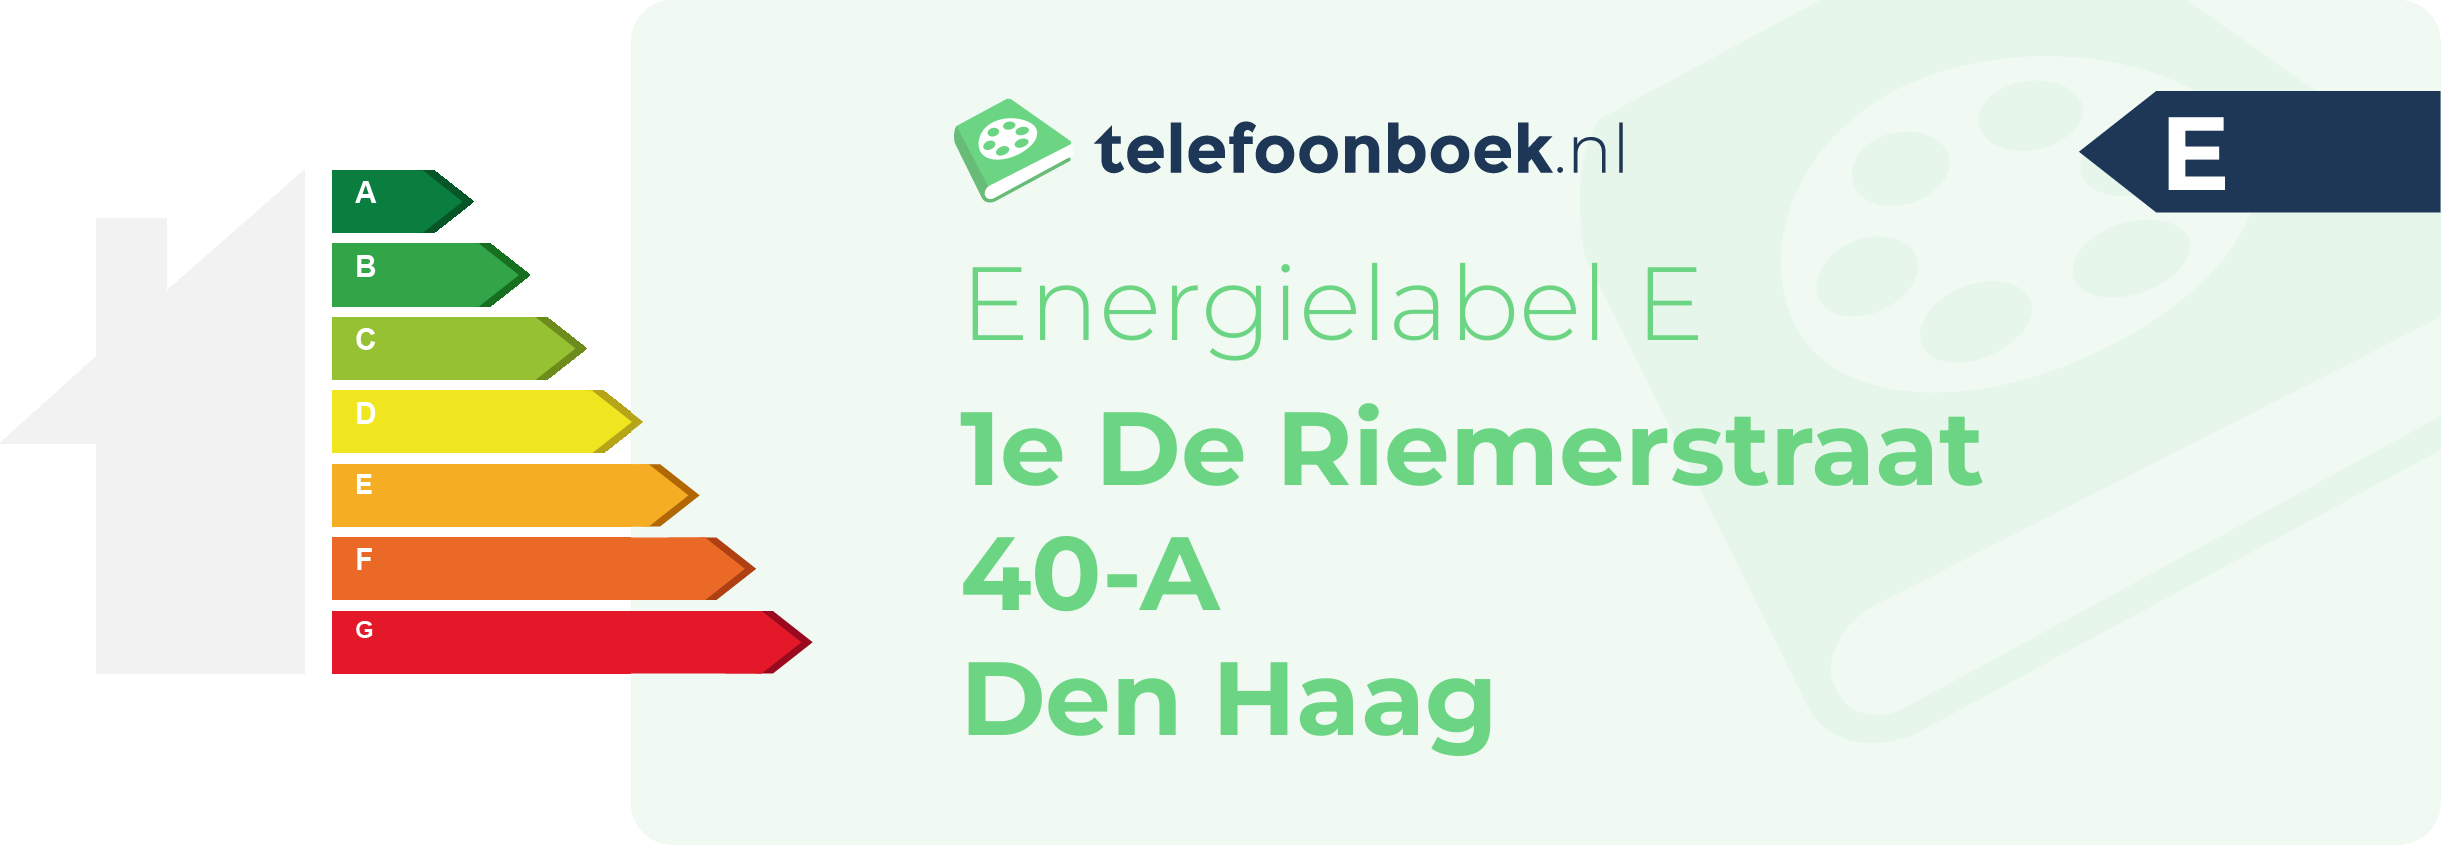 Energielabel 1e De Riemerstraat 40-A Den Haag